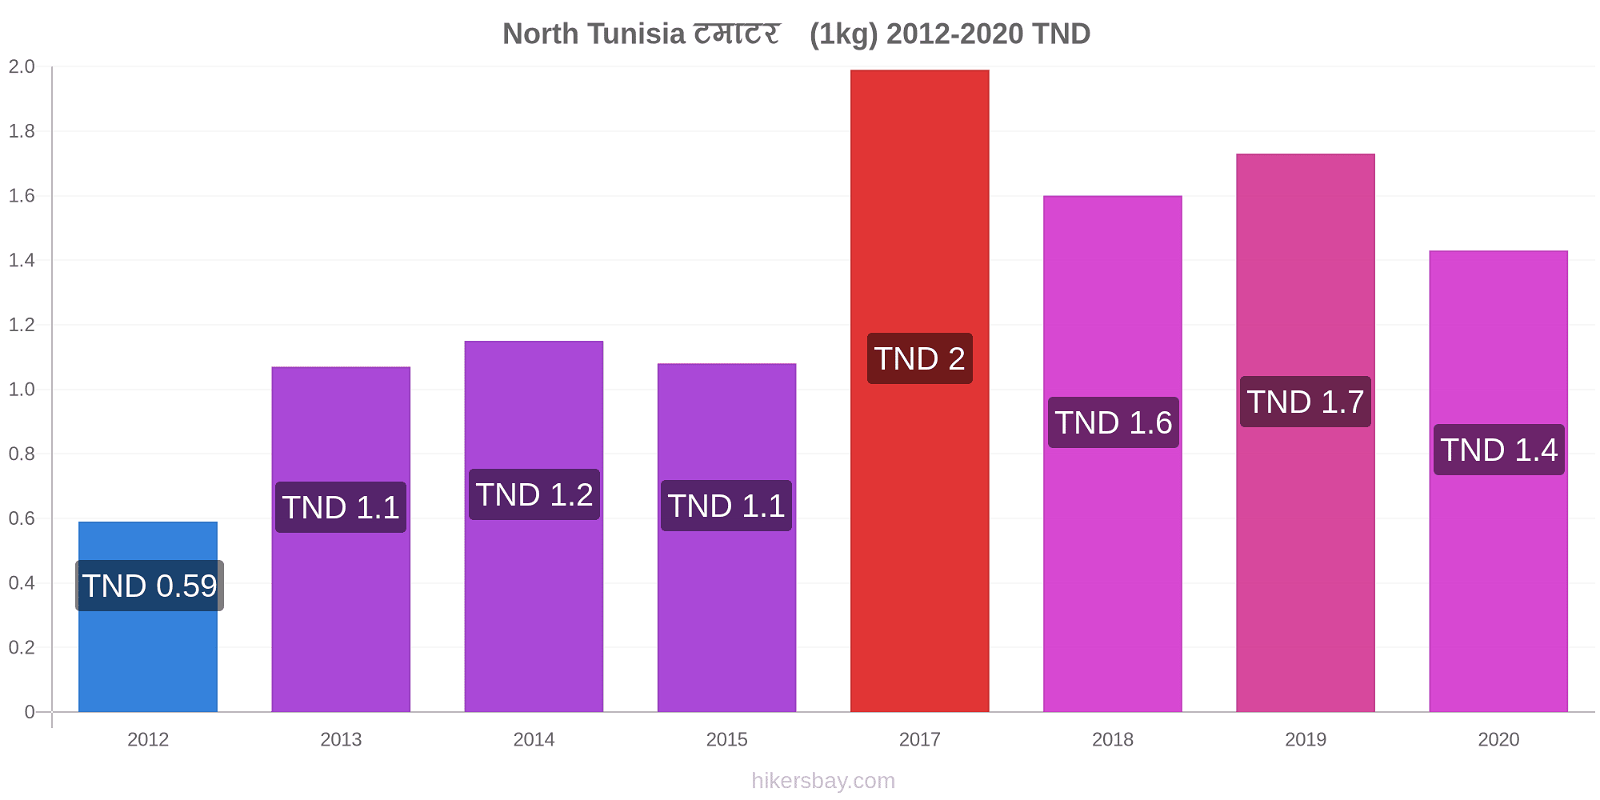 North Tunisia मूल्य परिवर्तन टमाटर (1kg) hikersbay.com